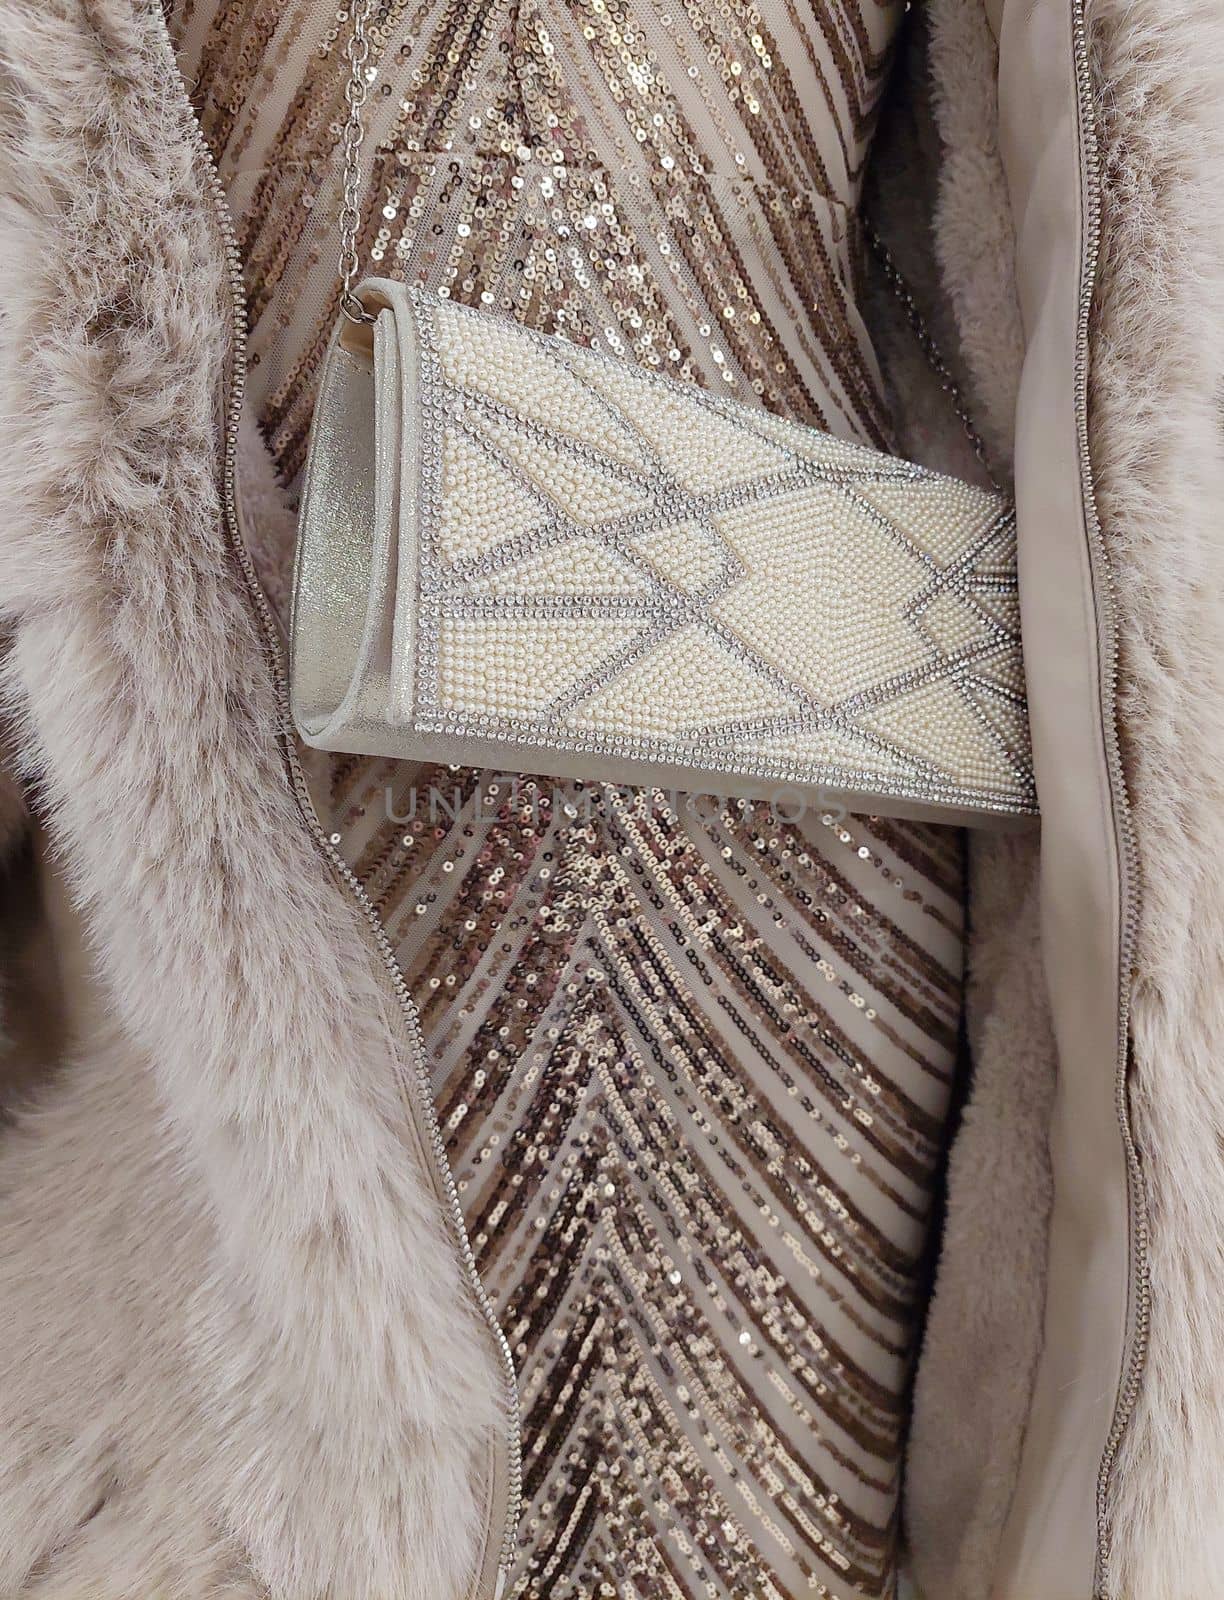 Glittering casual dress with fur top casual handbag. by gallofoto